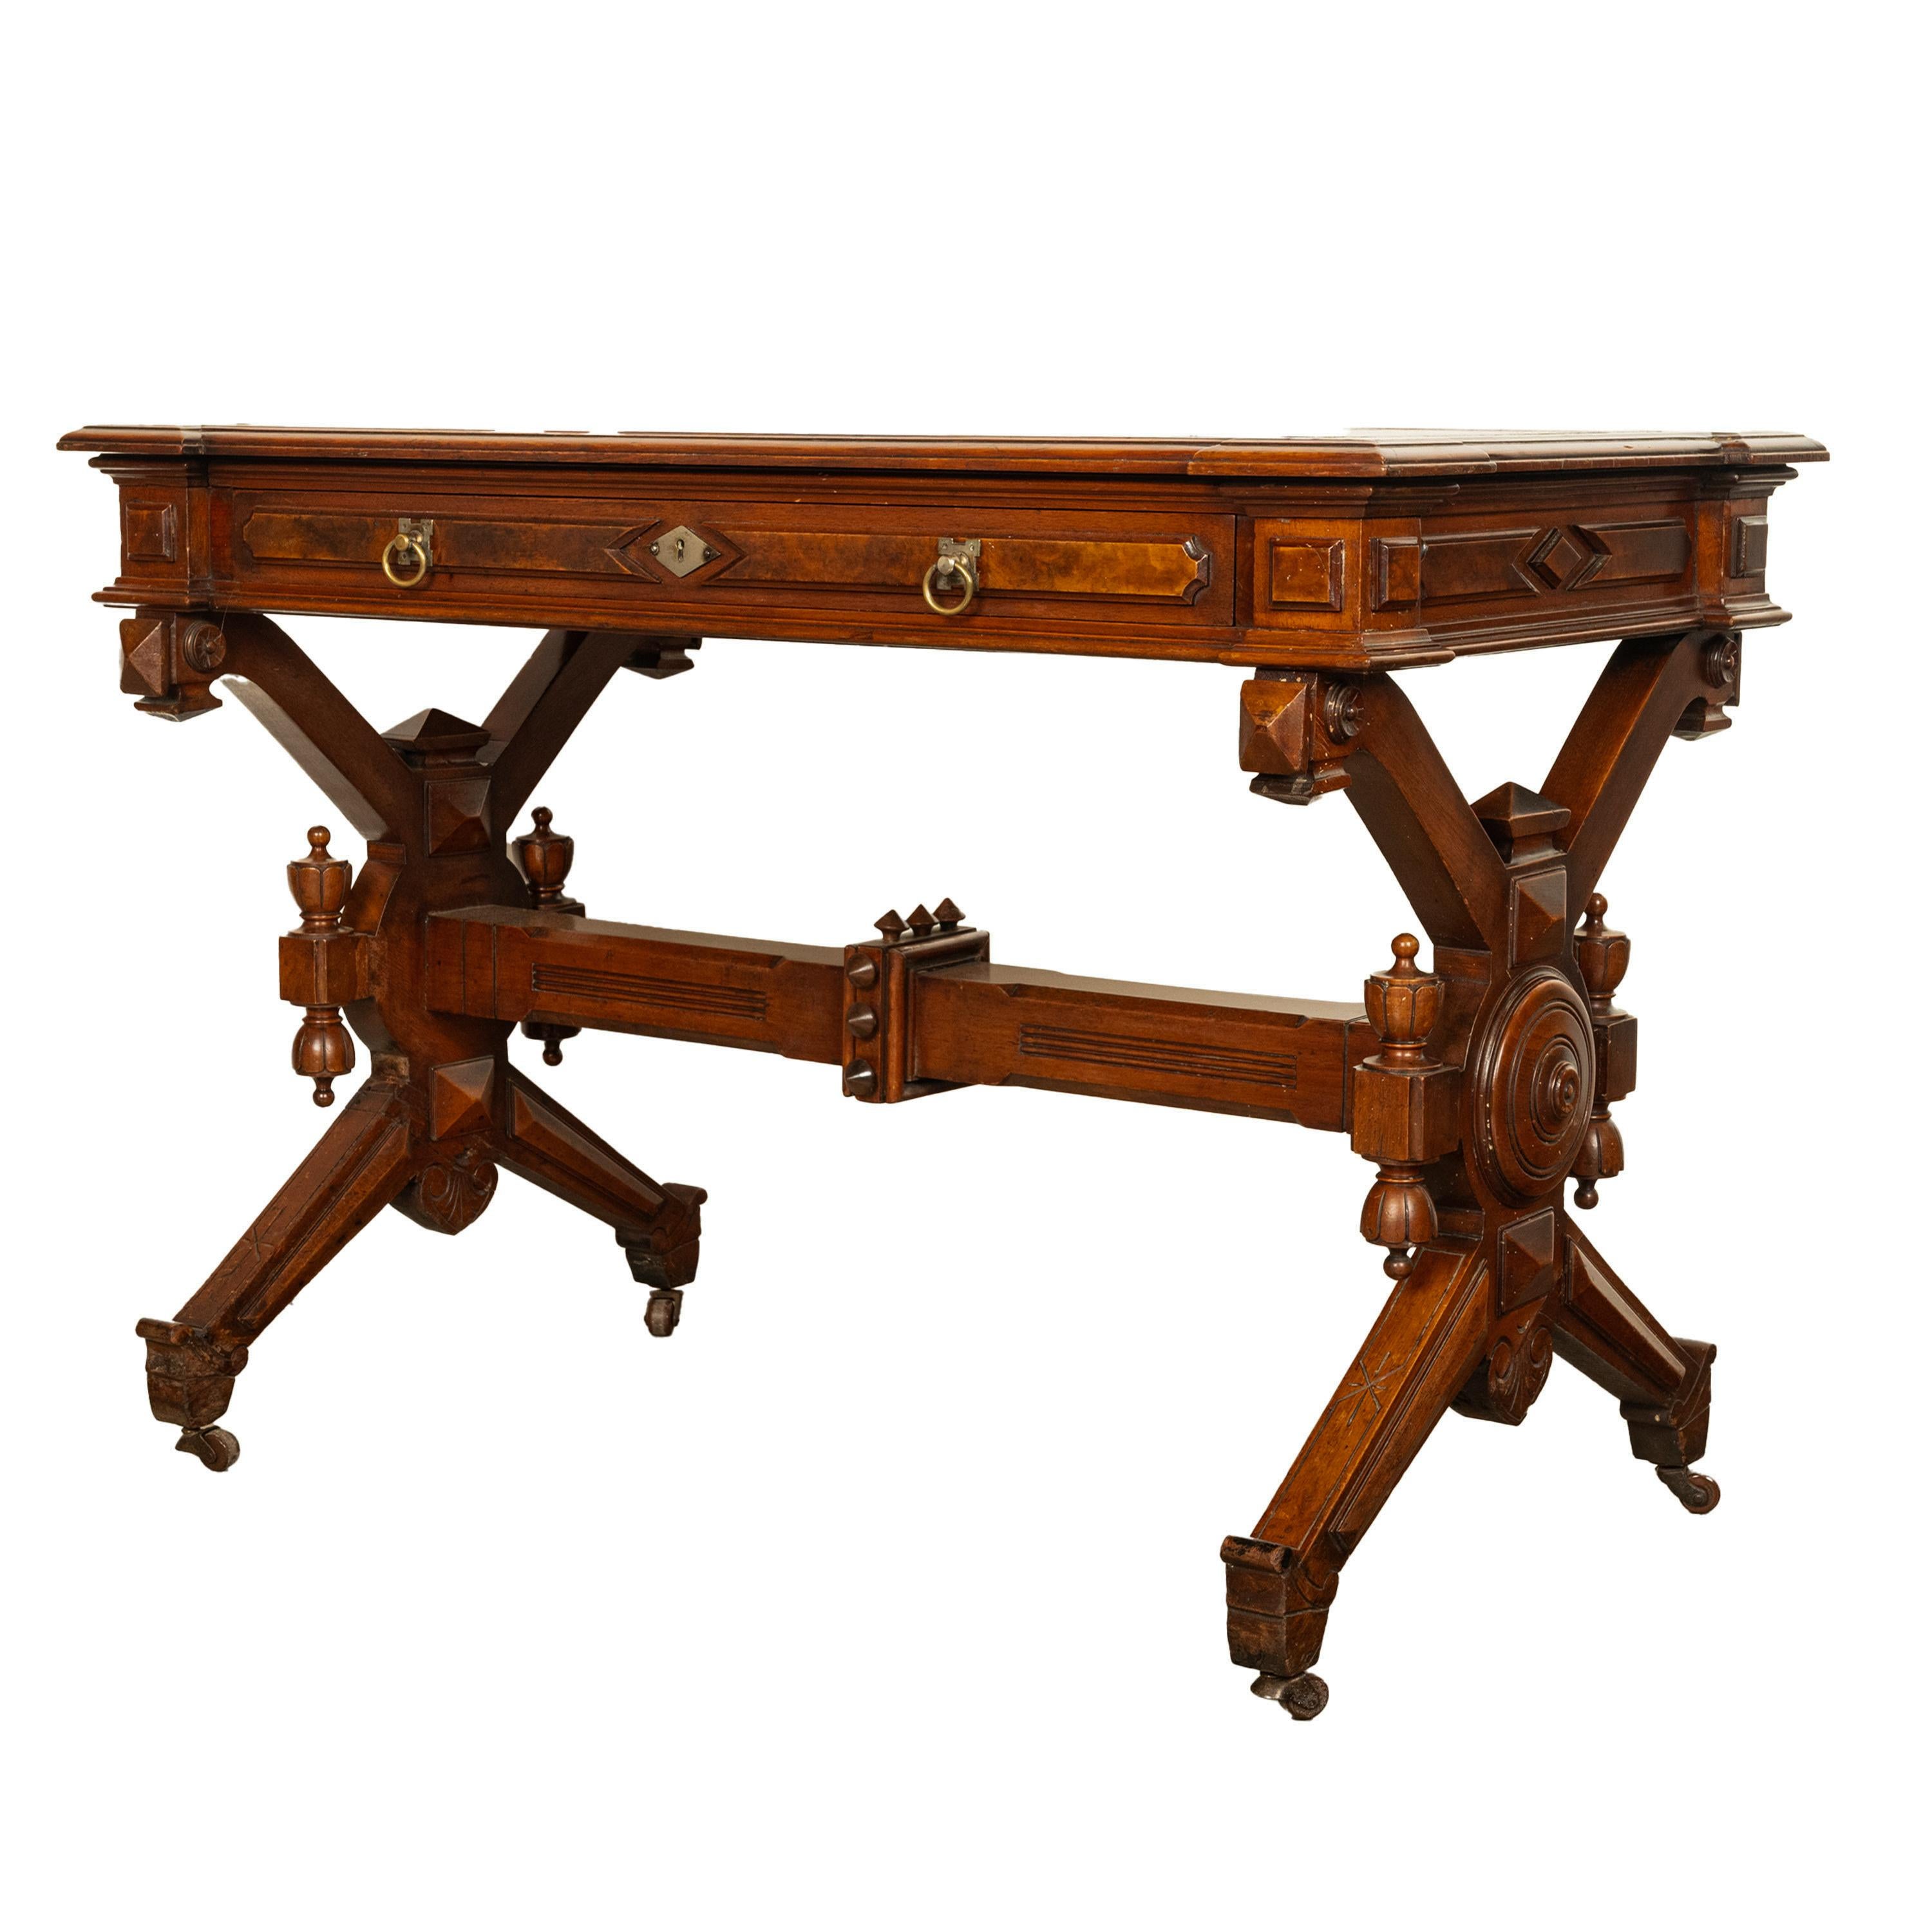 Late 19th Century Antique American Walnut Renaissance Revival Aesthetic Movement Desk Table 1875 For Sale